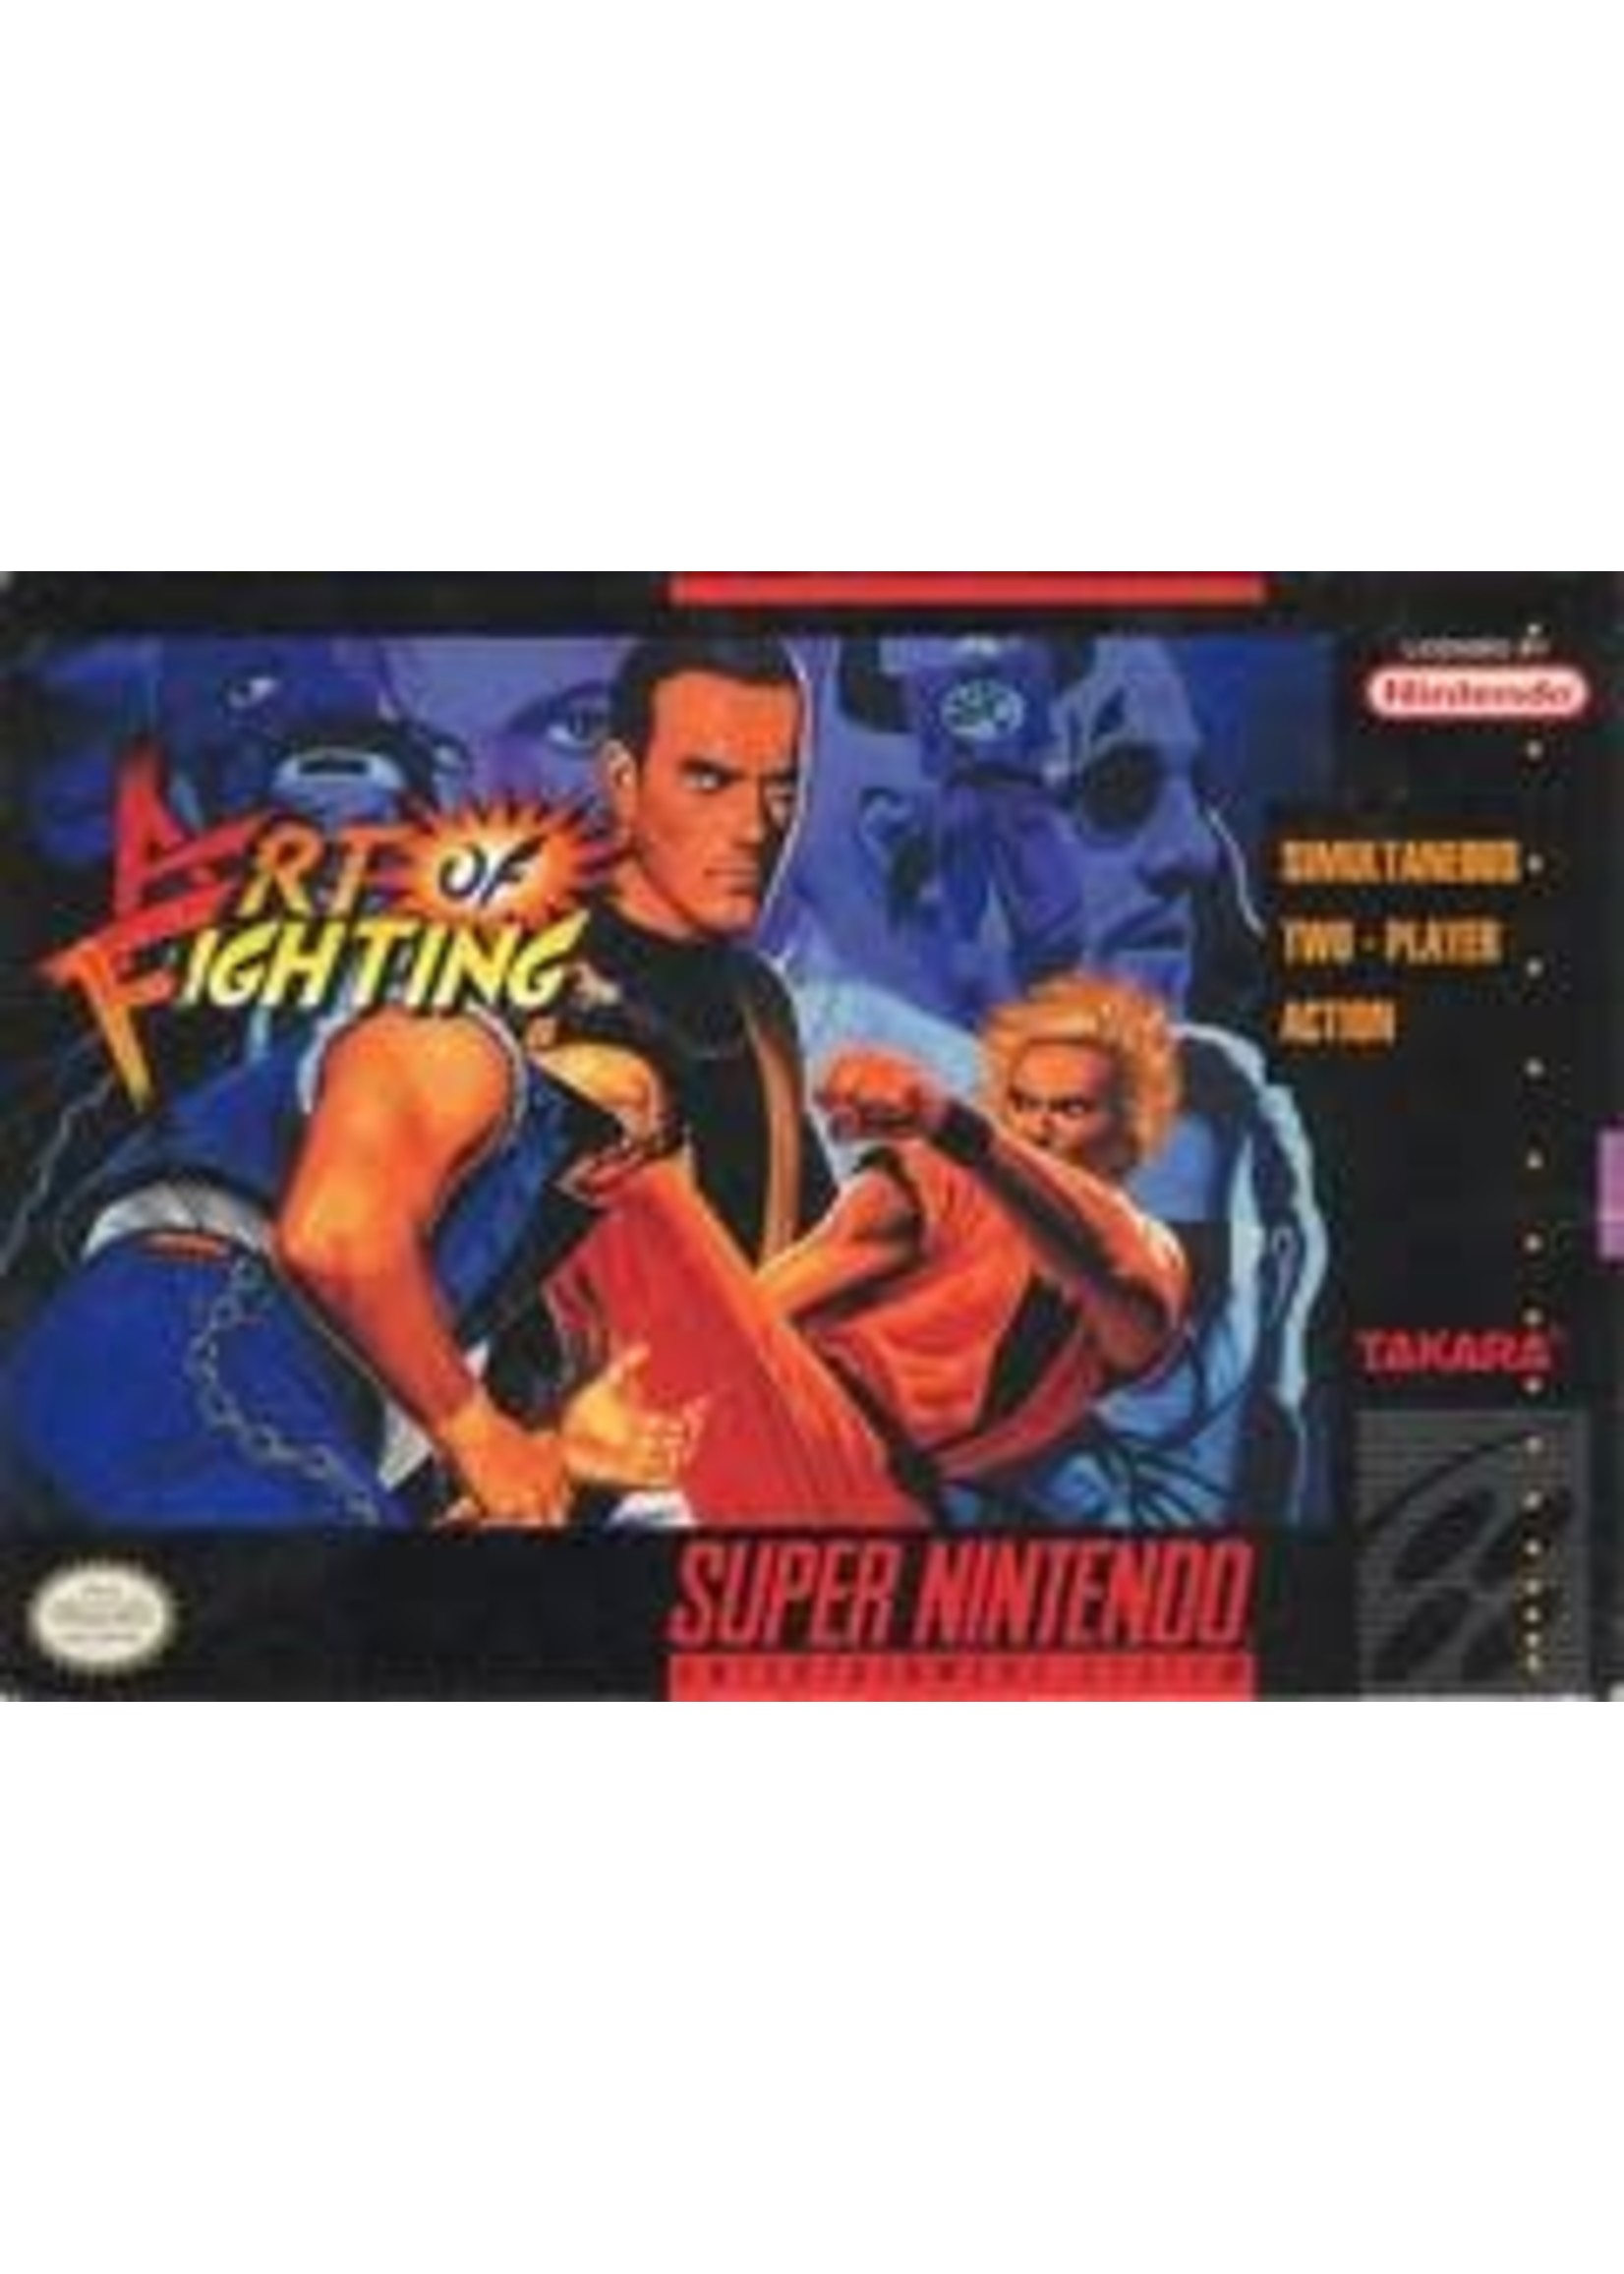 Art Of Fighting Super Nintendo CART ONLY